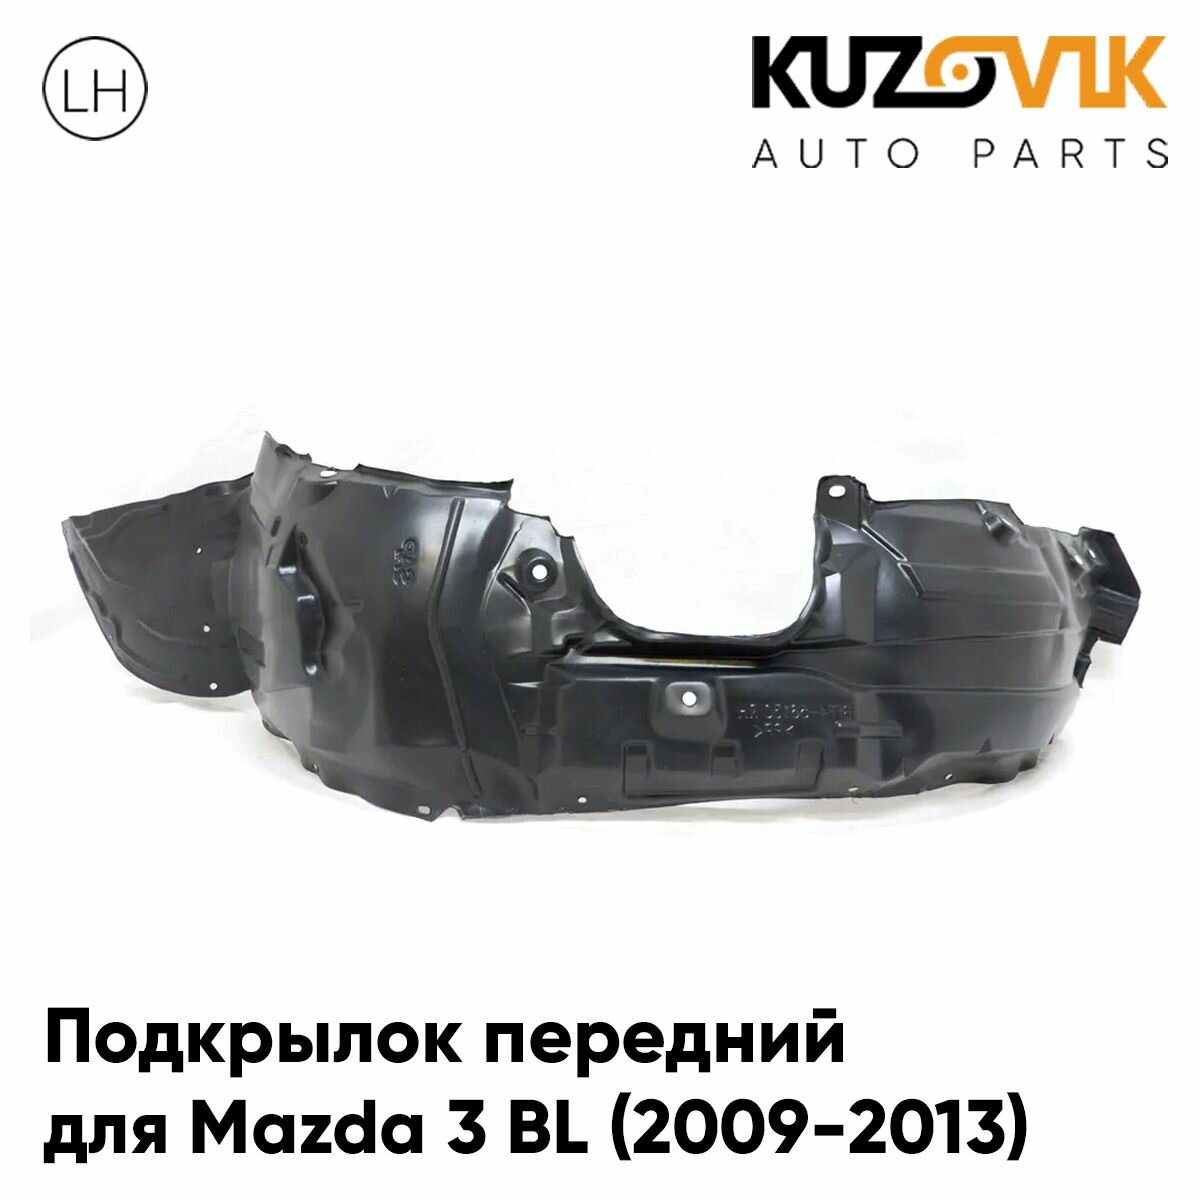 Подкрылок передний для Мазда Mazda 3 BL (2009-2013) левый